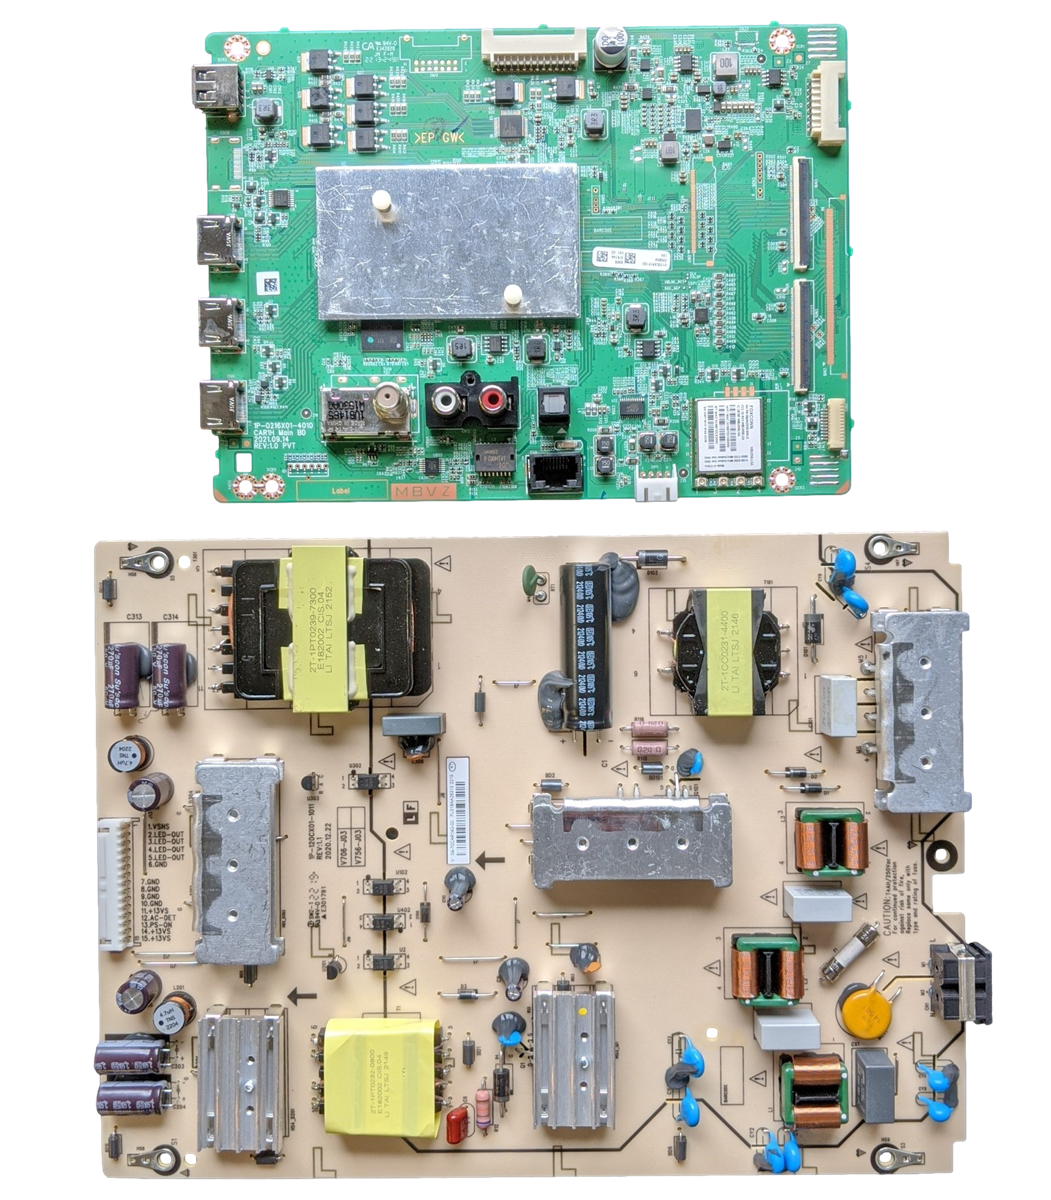 M70Q6M-K03 Vizio TV Repair Parts Kit, Y8389832B Main Board, 09-70CAR140-00 Power Supply, M70Q6M-K03